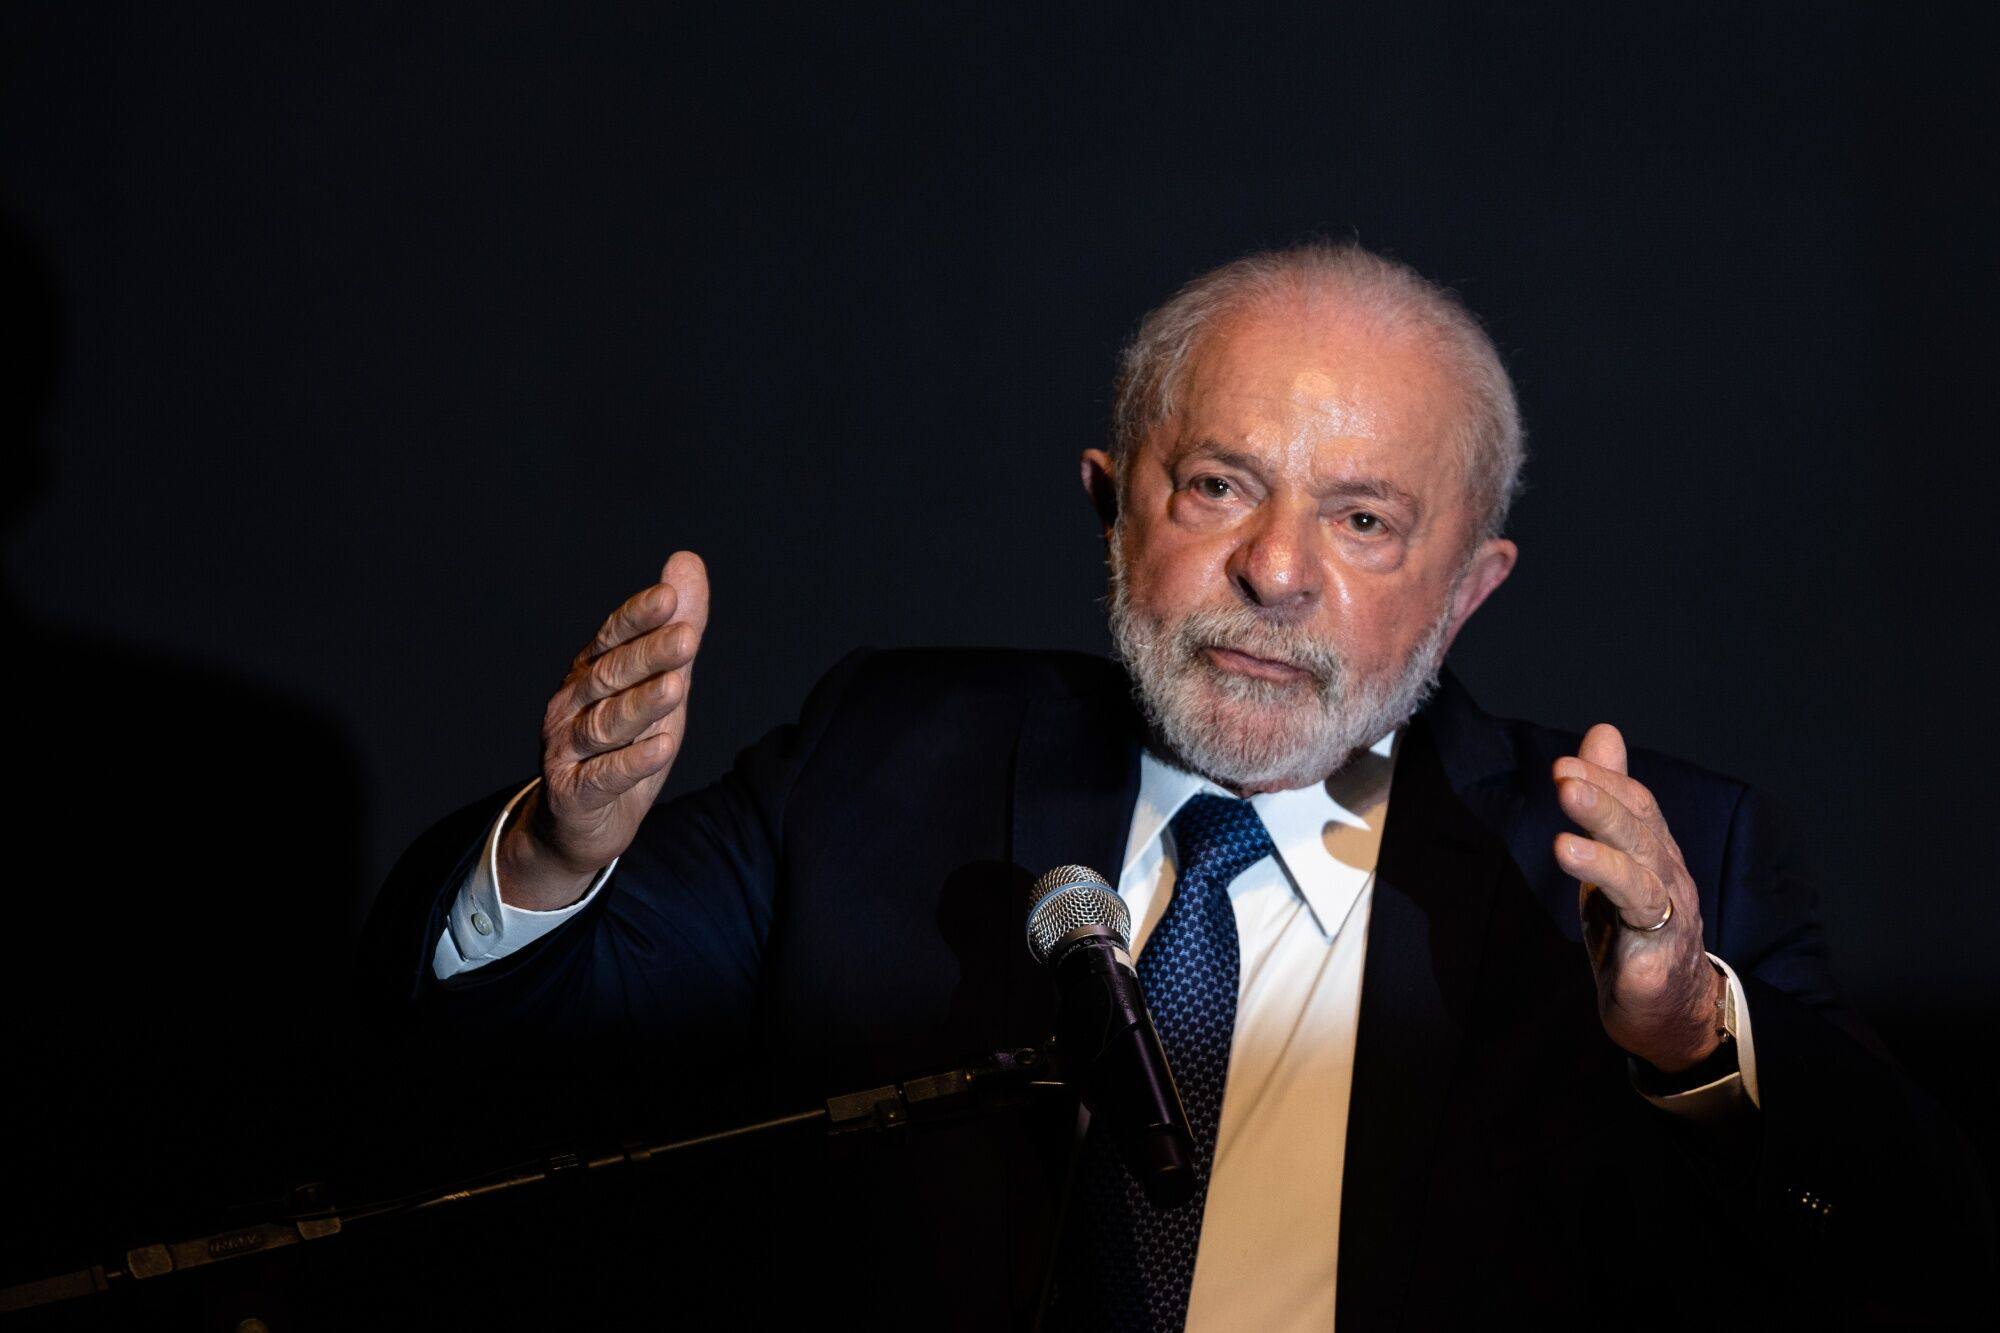 Luiz Inacio Lula da Silva, Brazil’s president, speaks during an event in Sao Paulo, Brazil, on Thursday. Photo: Bloomberg